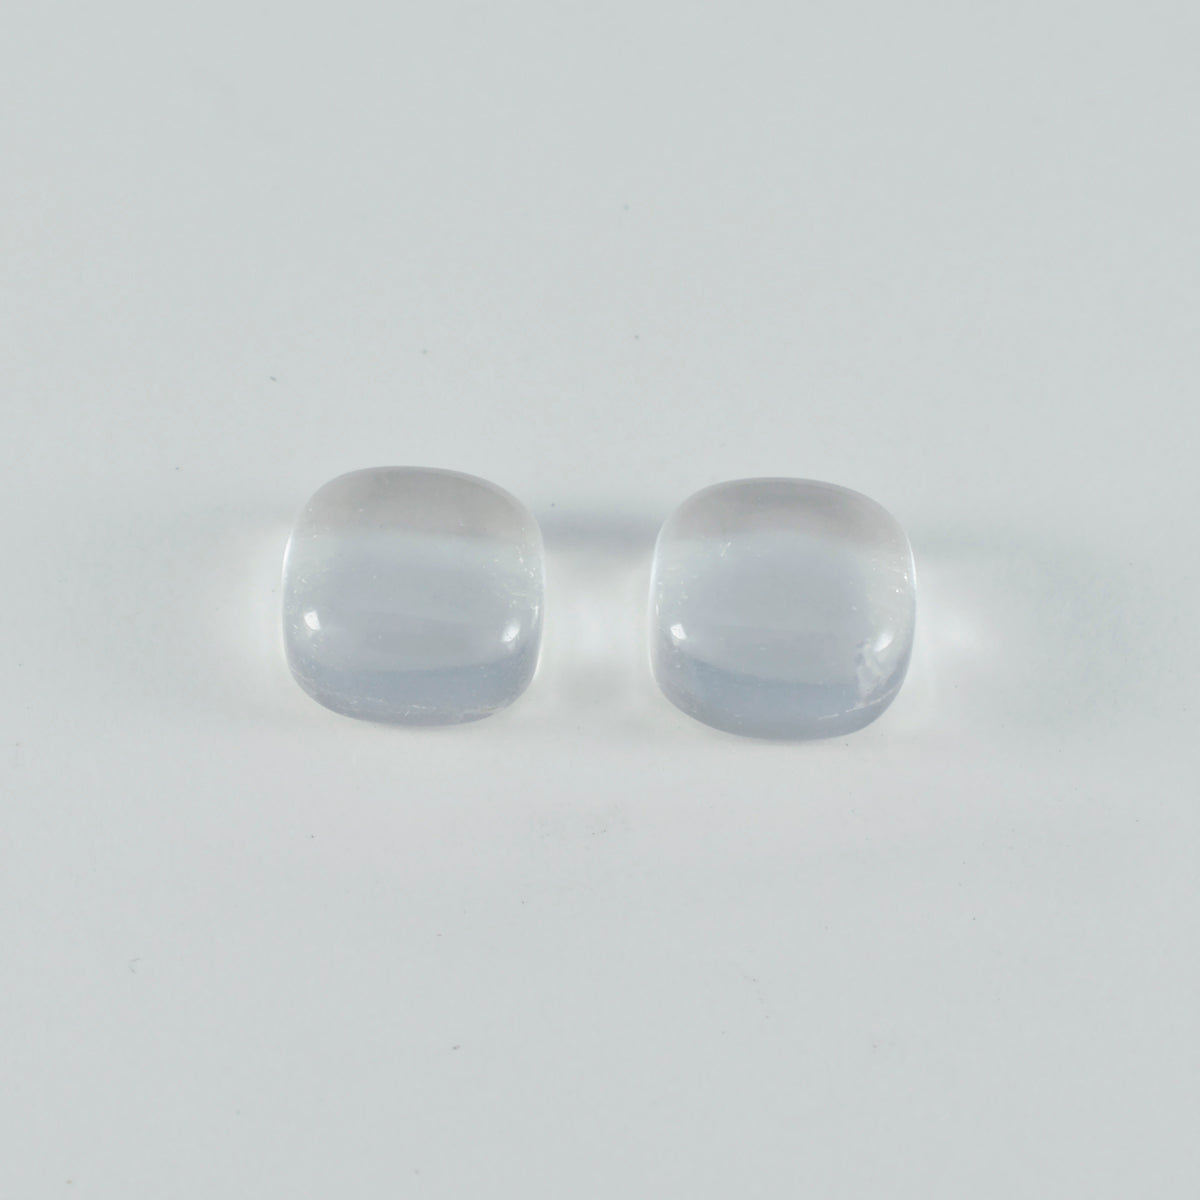 Riyogems 1PC White Crystal Quartz Cabochon 9x9 mm Cushion Shape good-looking Quality Loose Stone